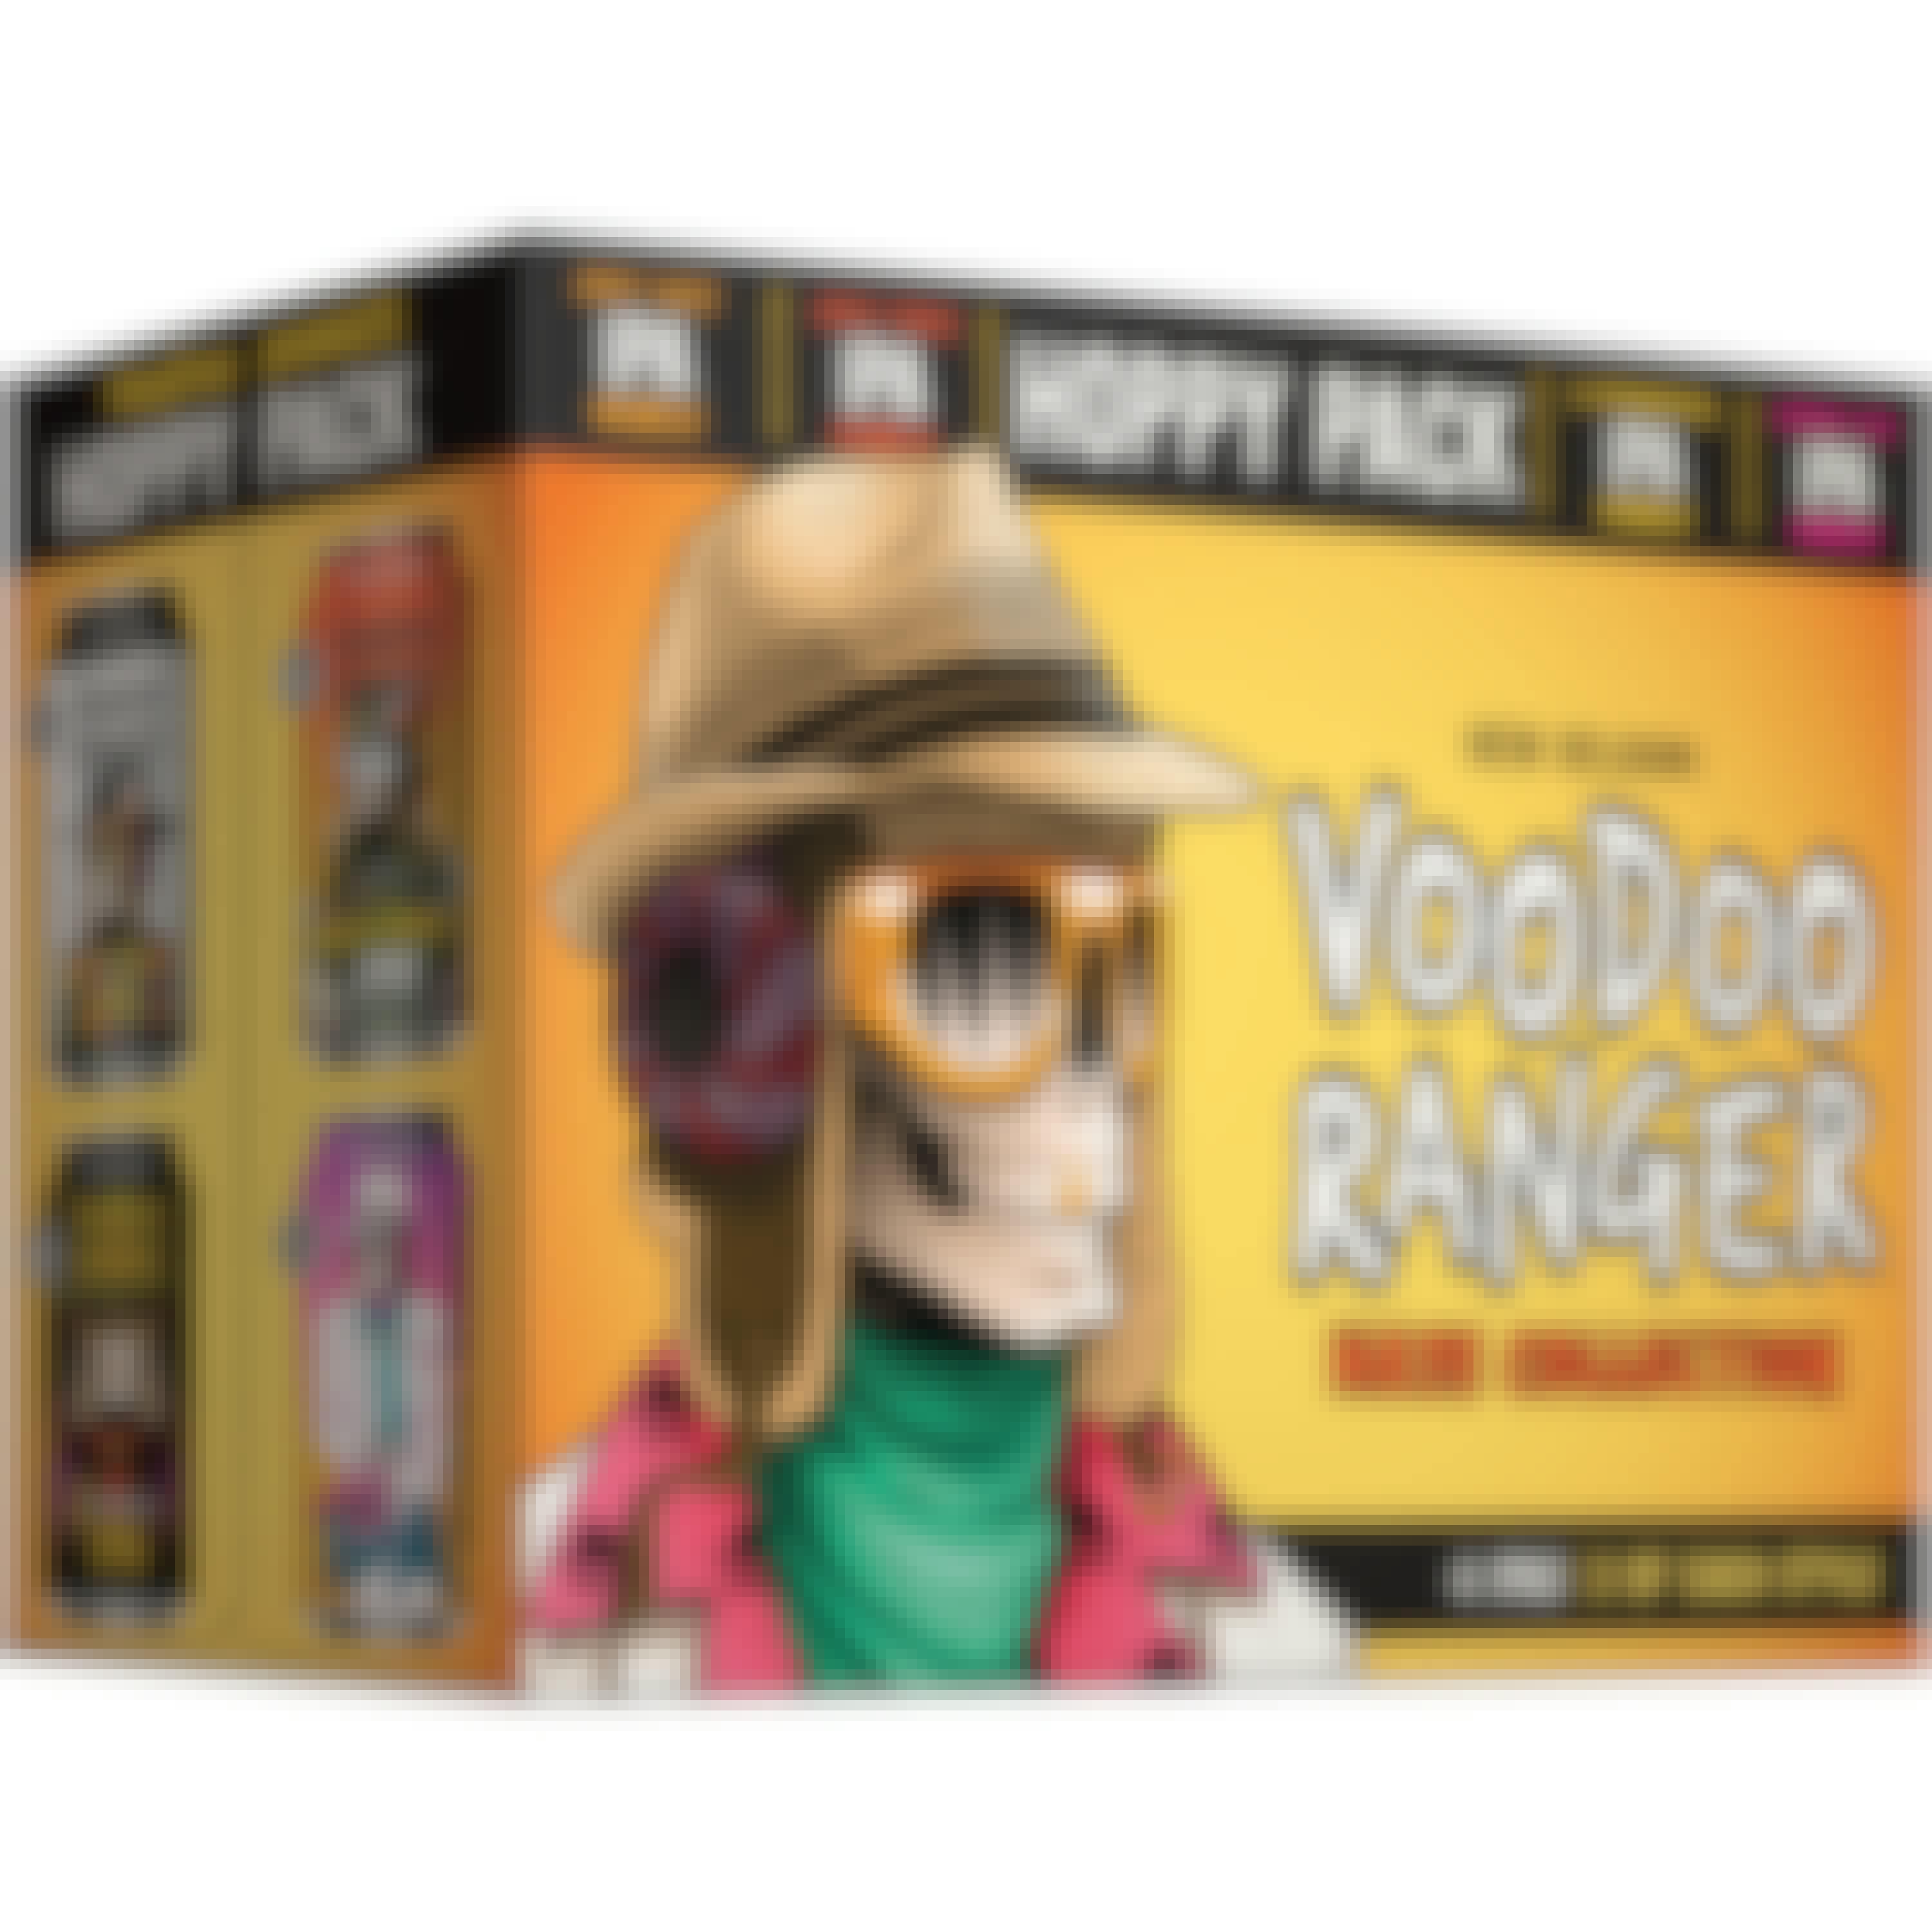 New Belgium Voodoo Ranger Hoppy Variety Pack Can